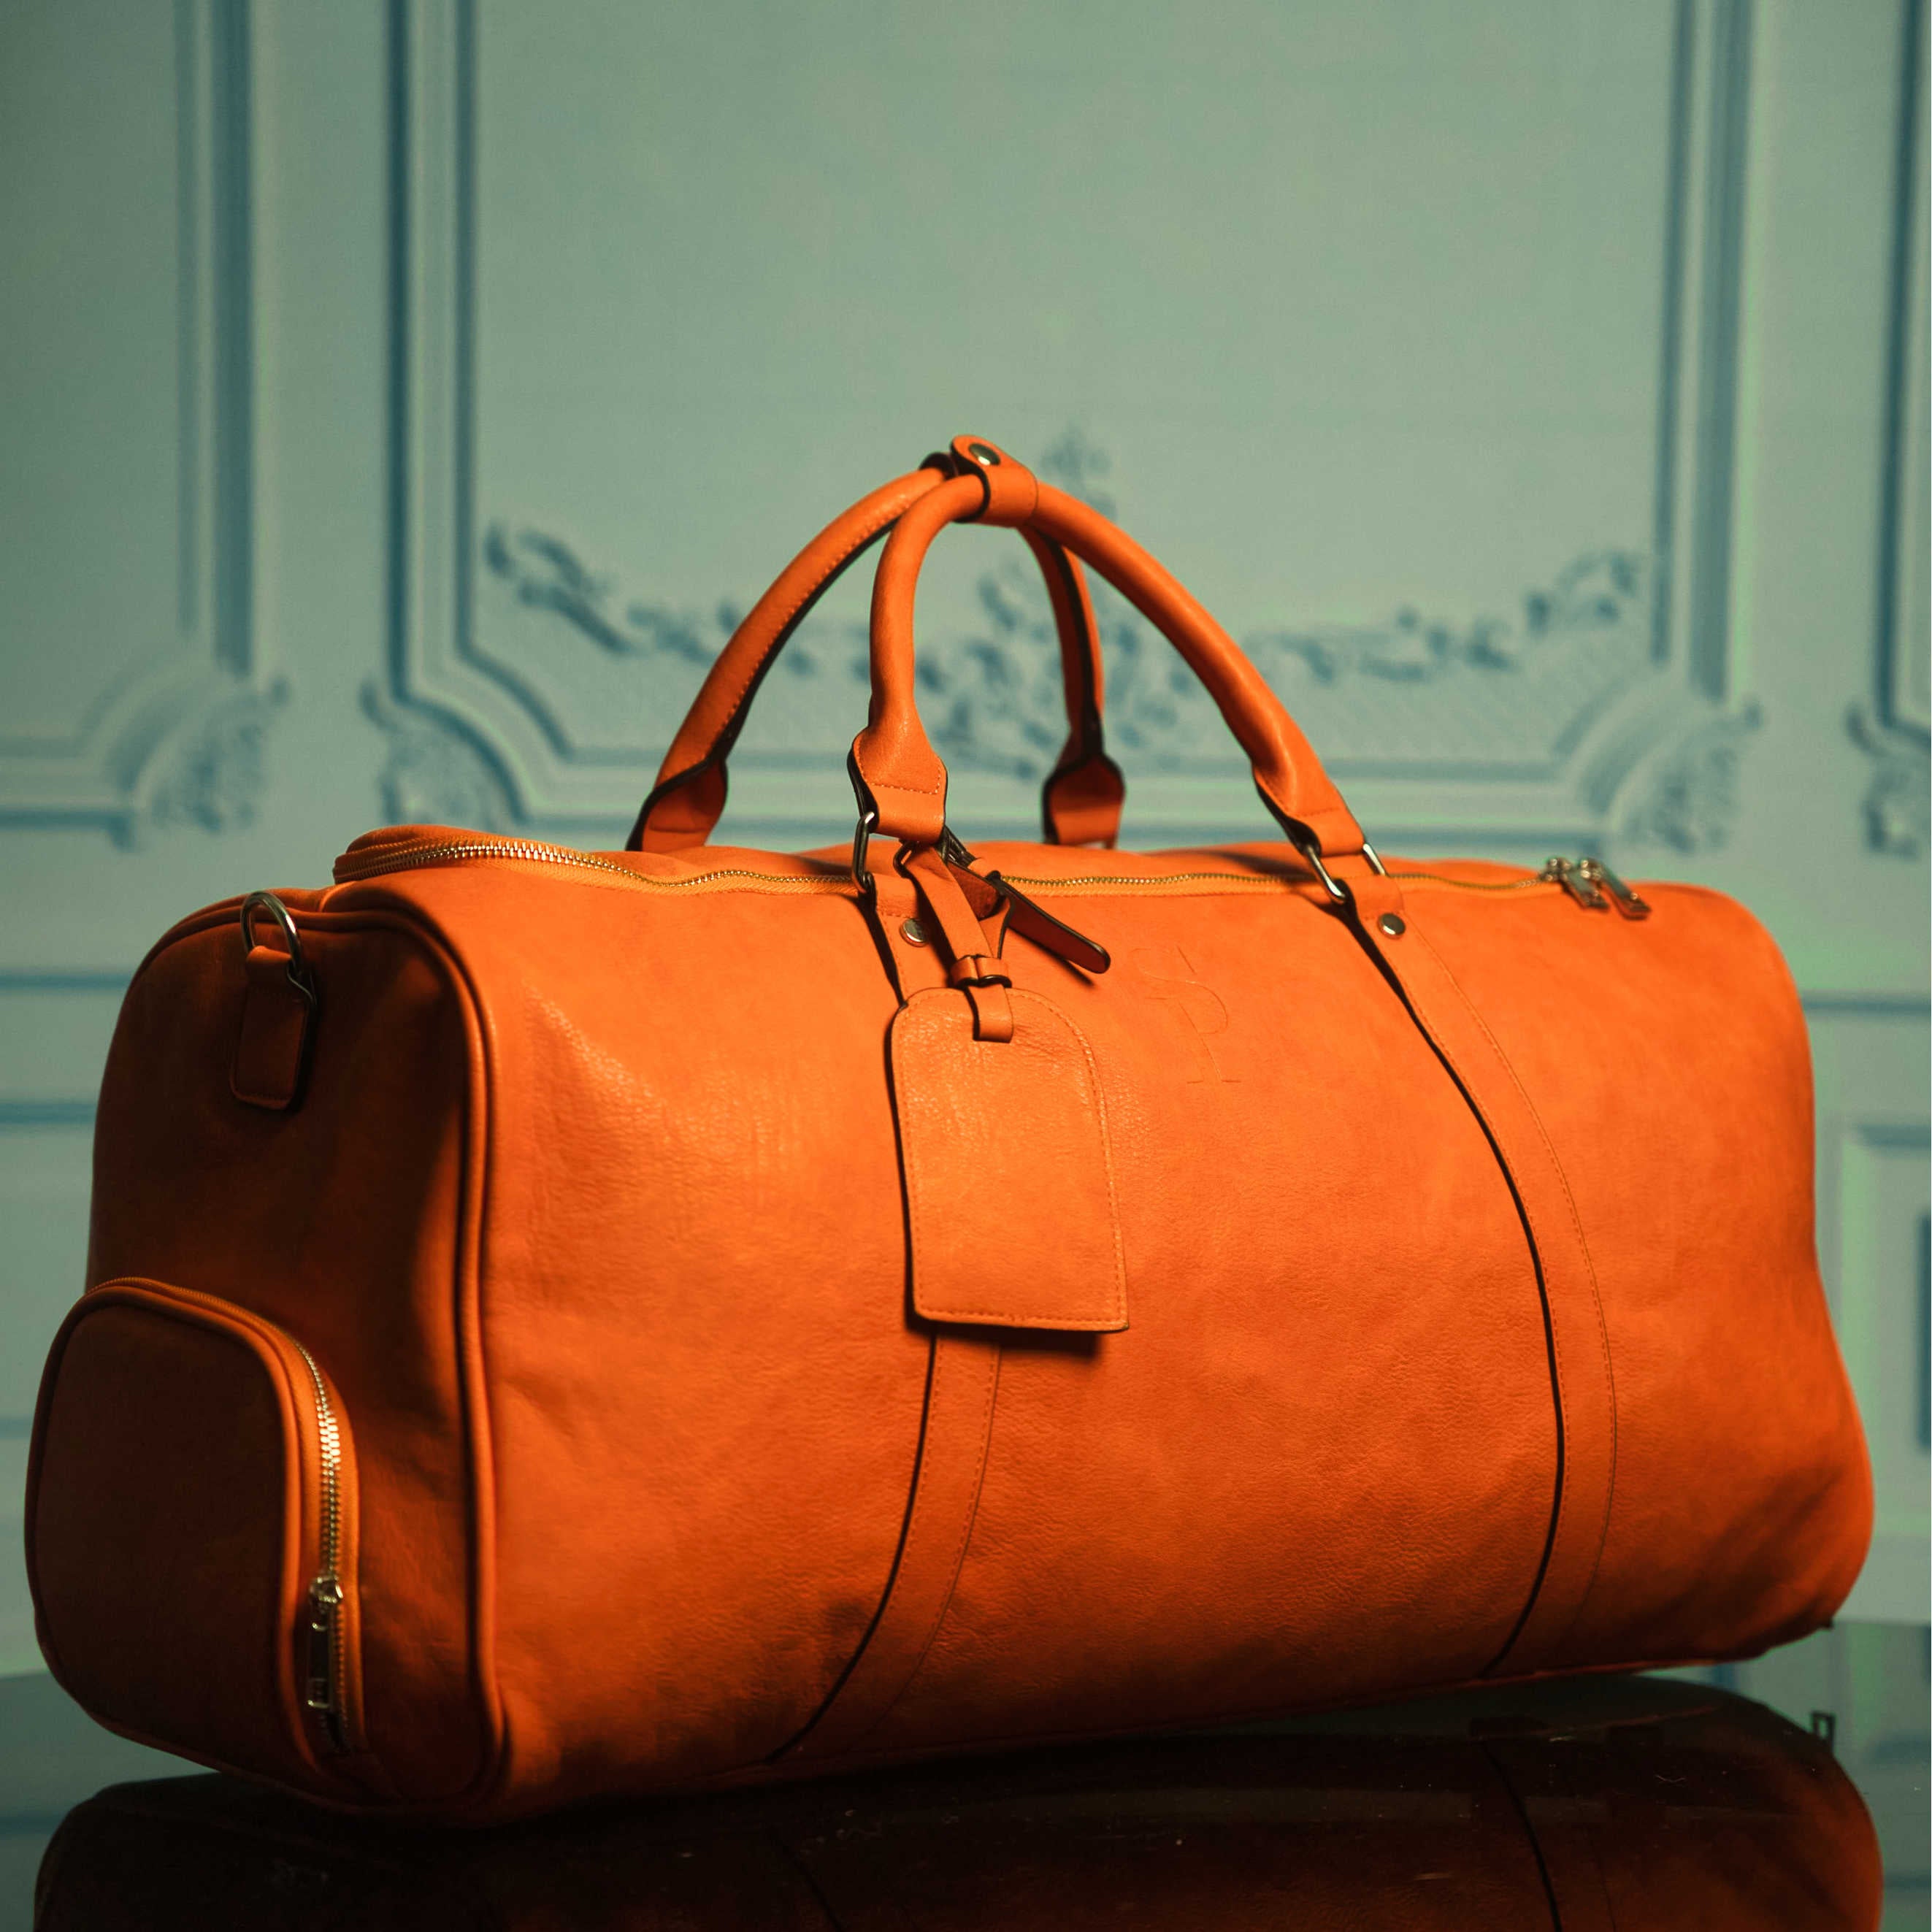 Orange Tumbled Leather Duffle Bag - Sole Premise